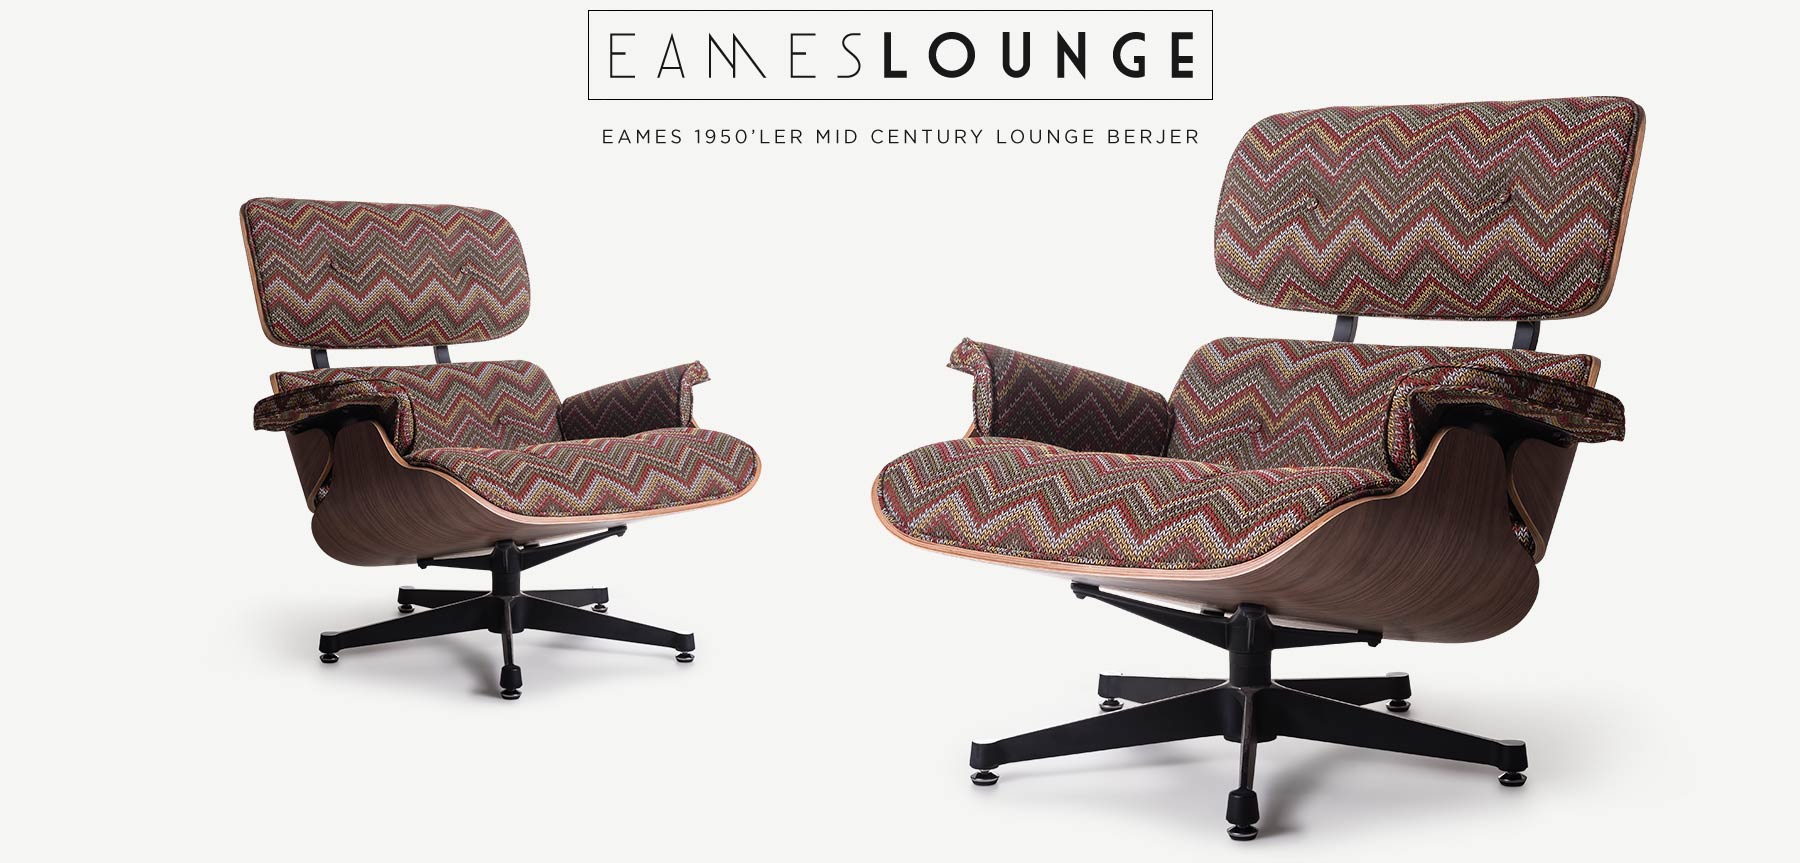 eames lounge chair'in resmi